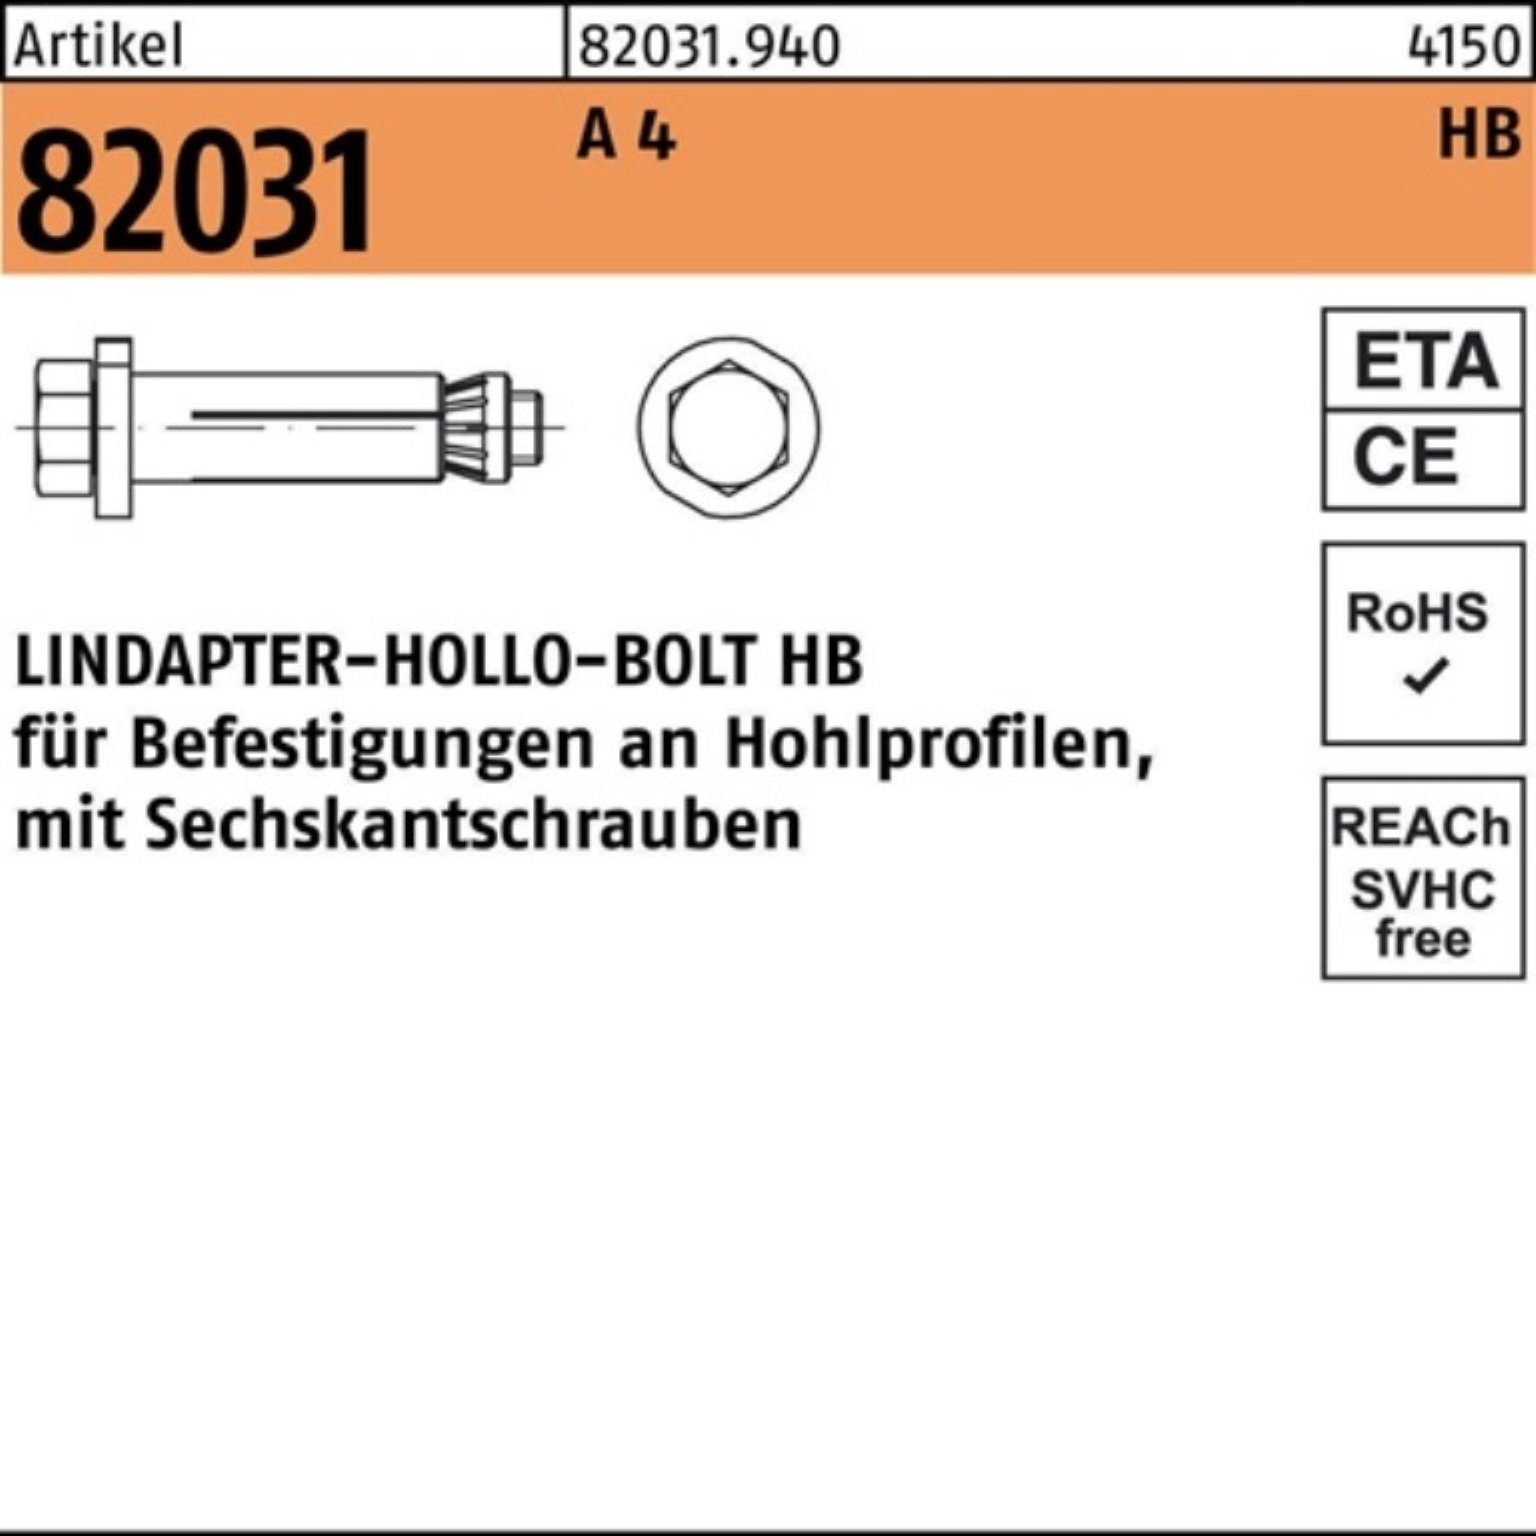 6-ktschraube (90/34) Hohlraumdübel A 1 HB 100er 82031 4 Pack Hohlraumdübel R Lindapter 20-1